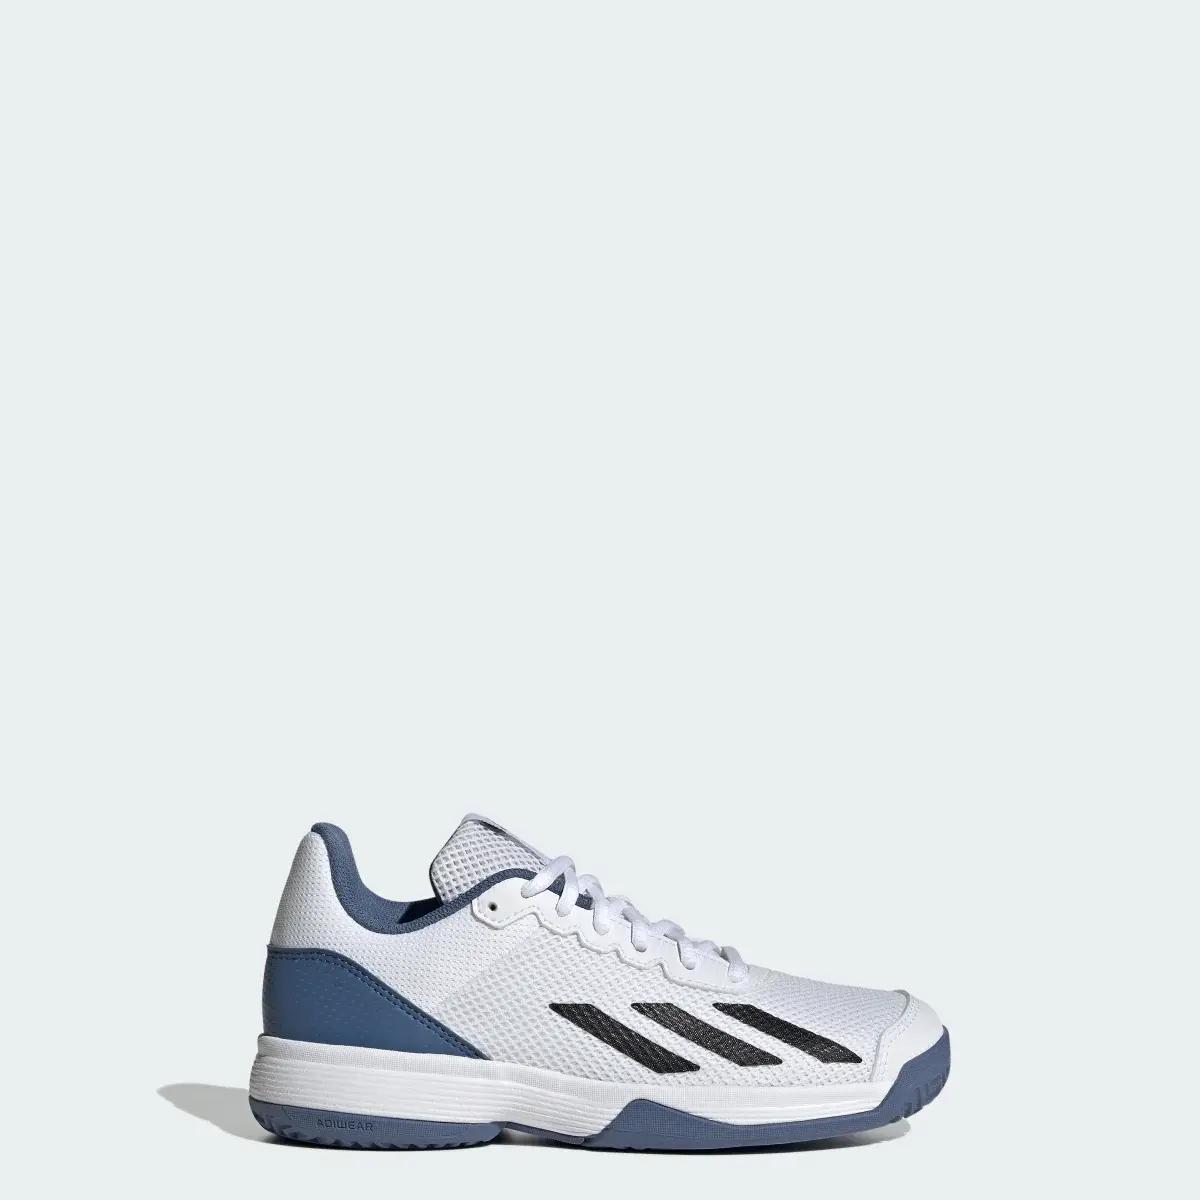 Adidas Courtflash Tennis Shoes. 1